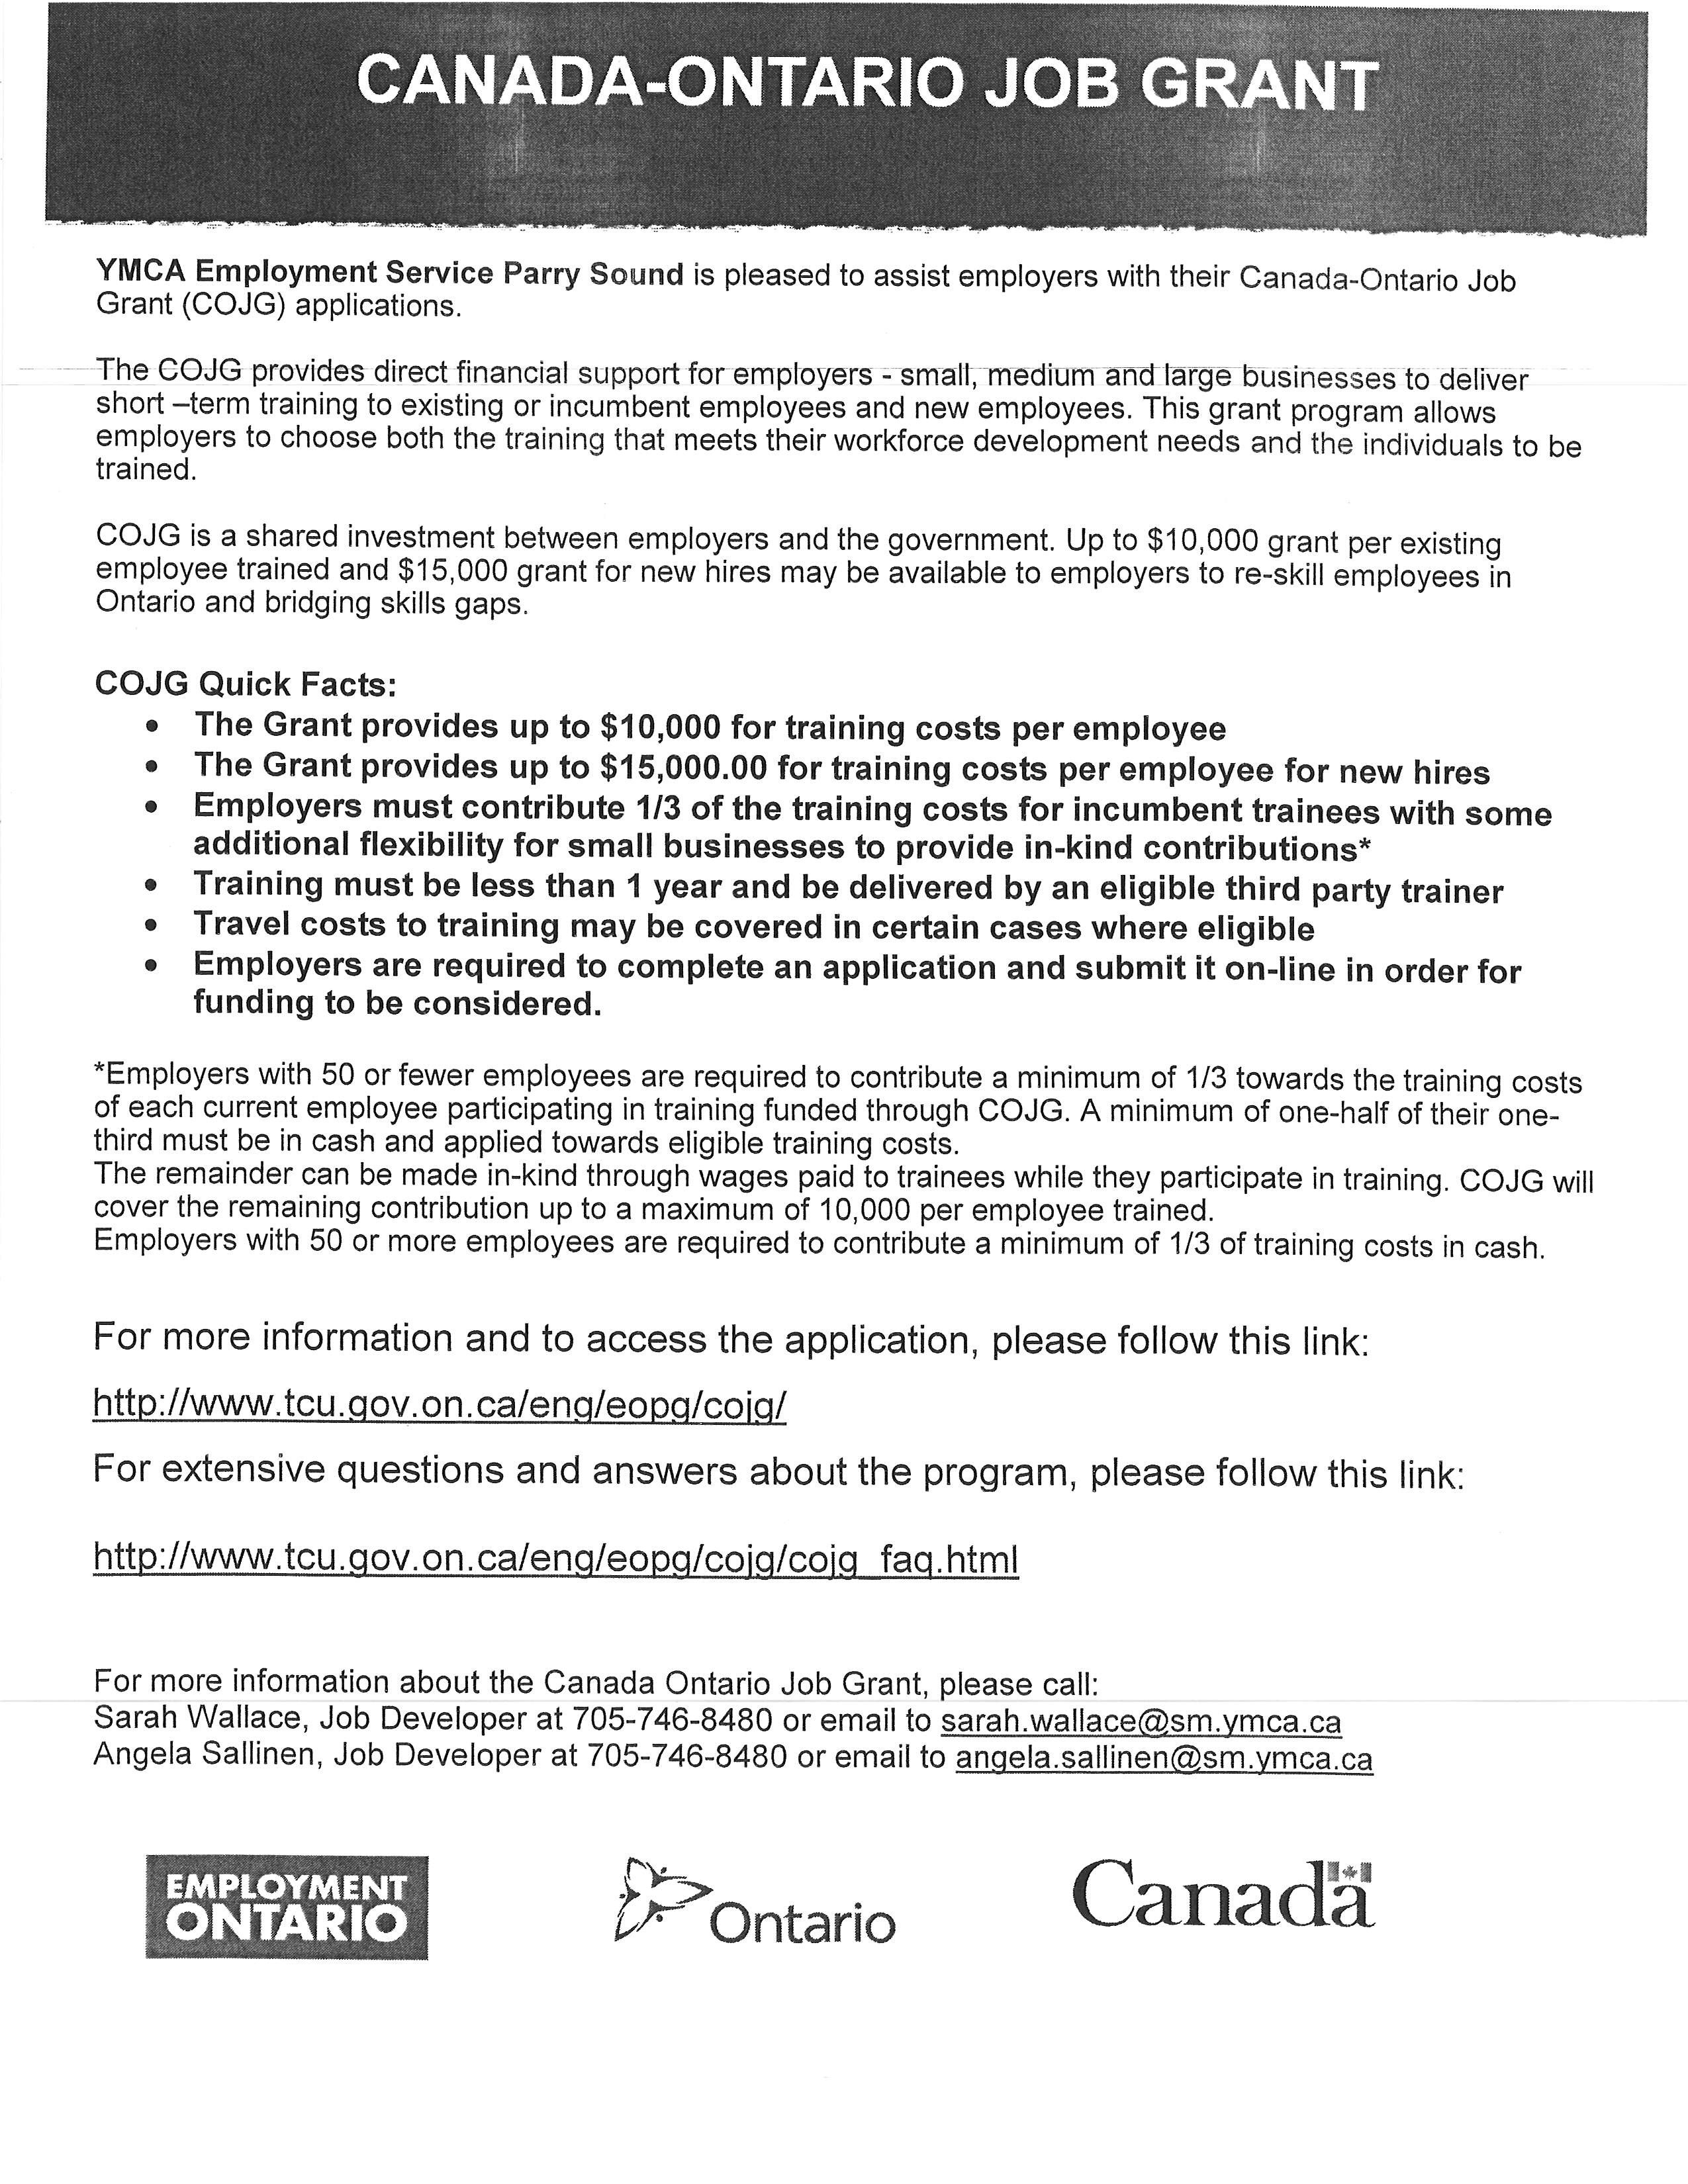 Canada Ontario Job Grant Community Business Development